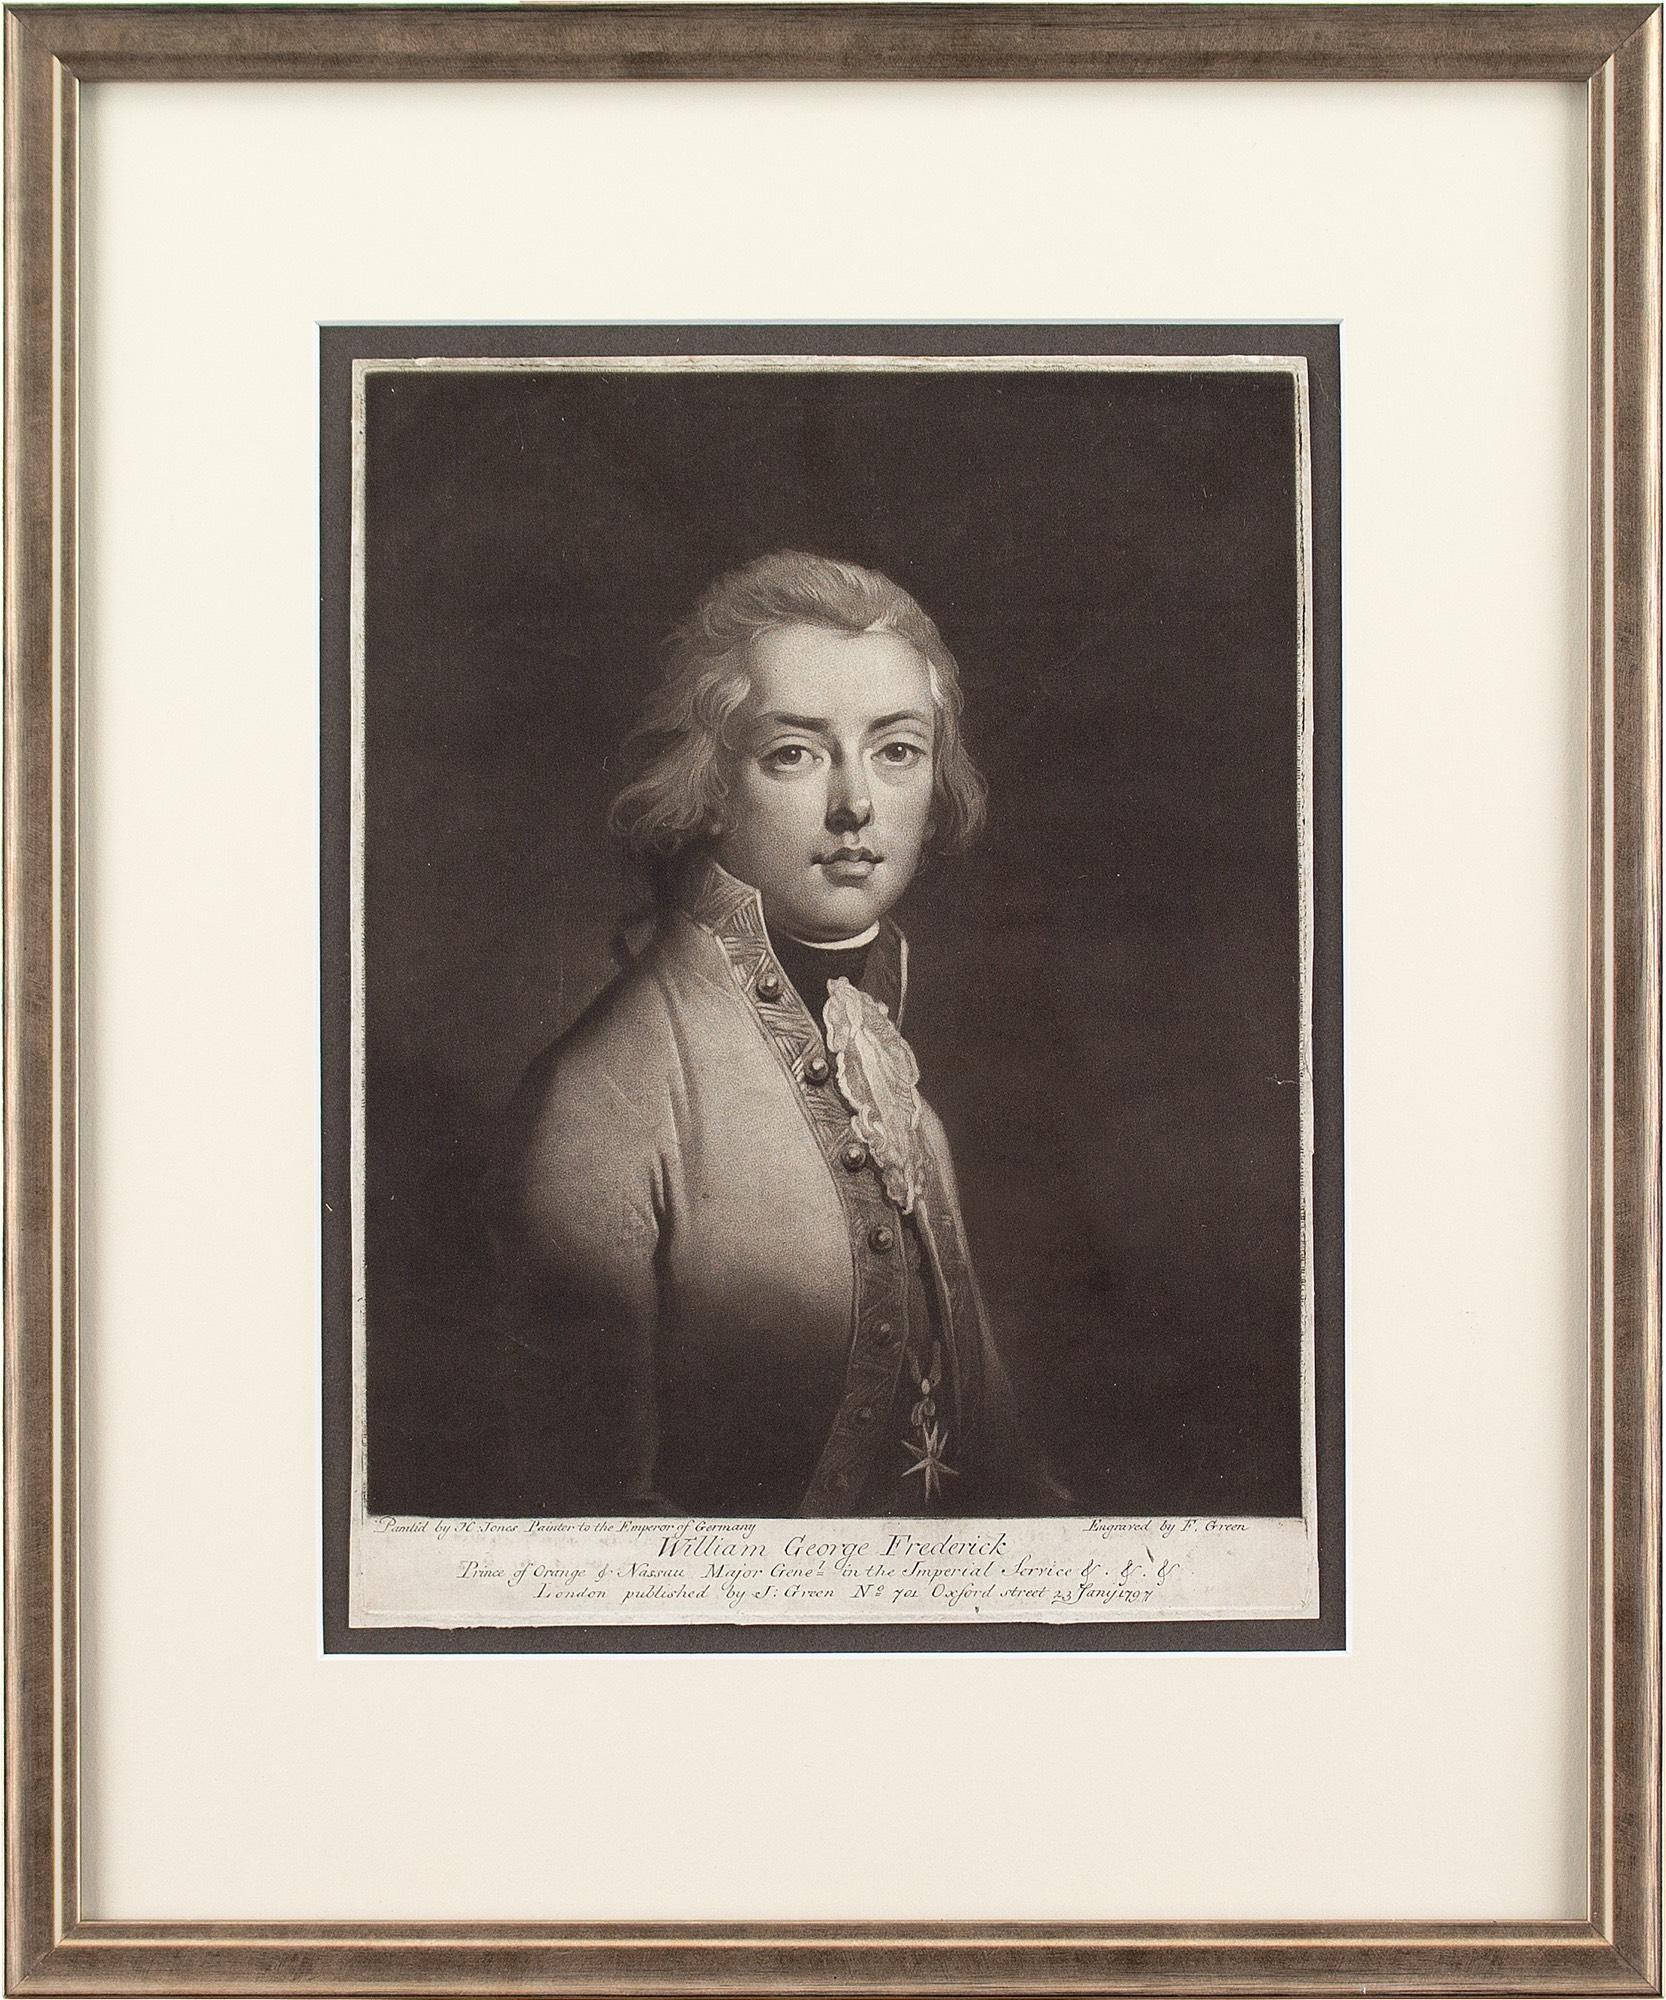 Unknown Portrait Print - 18th-Century Engraving, William George Frederick, Prince of Orange-Nassau